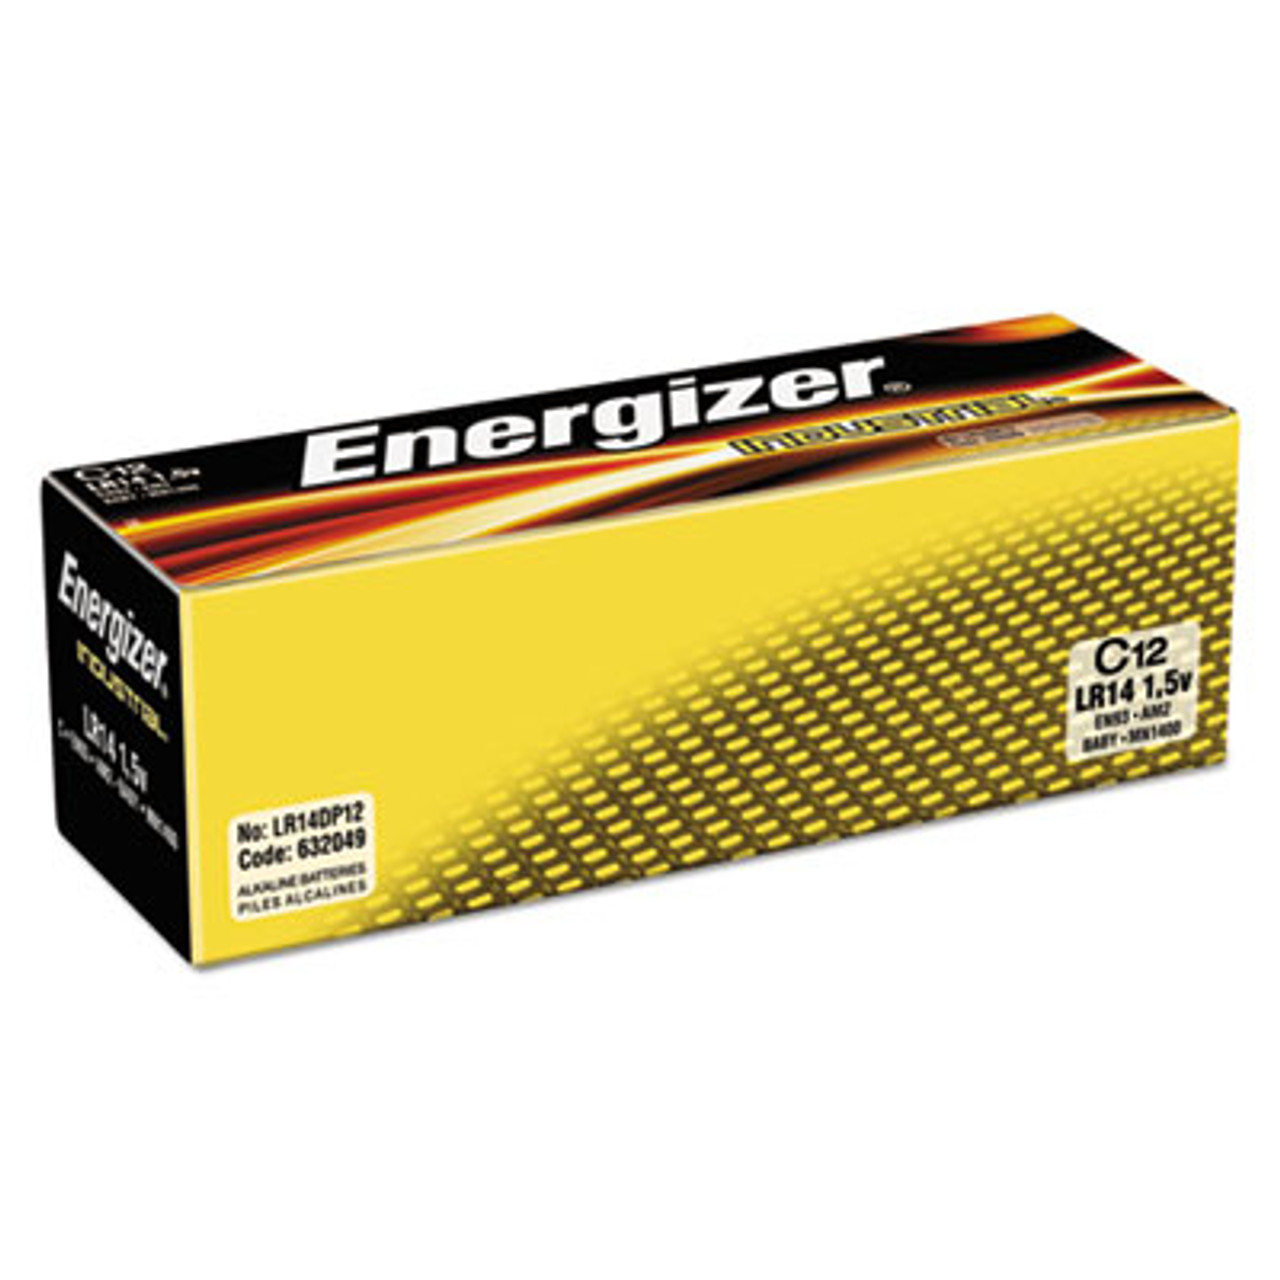 EVEEN93 - $20.96 - Industrial Alkaline C Batteries 1 5V 12 Box